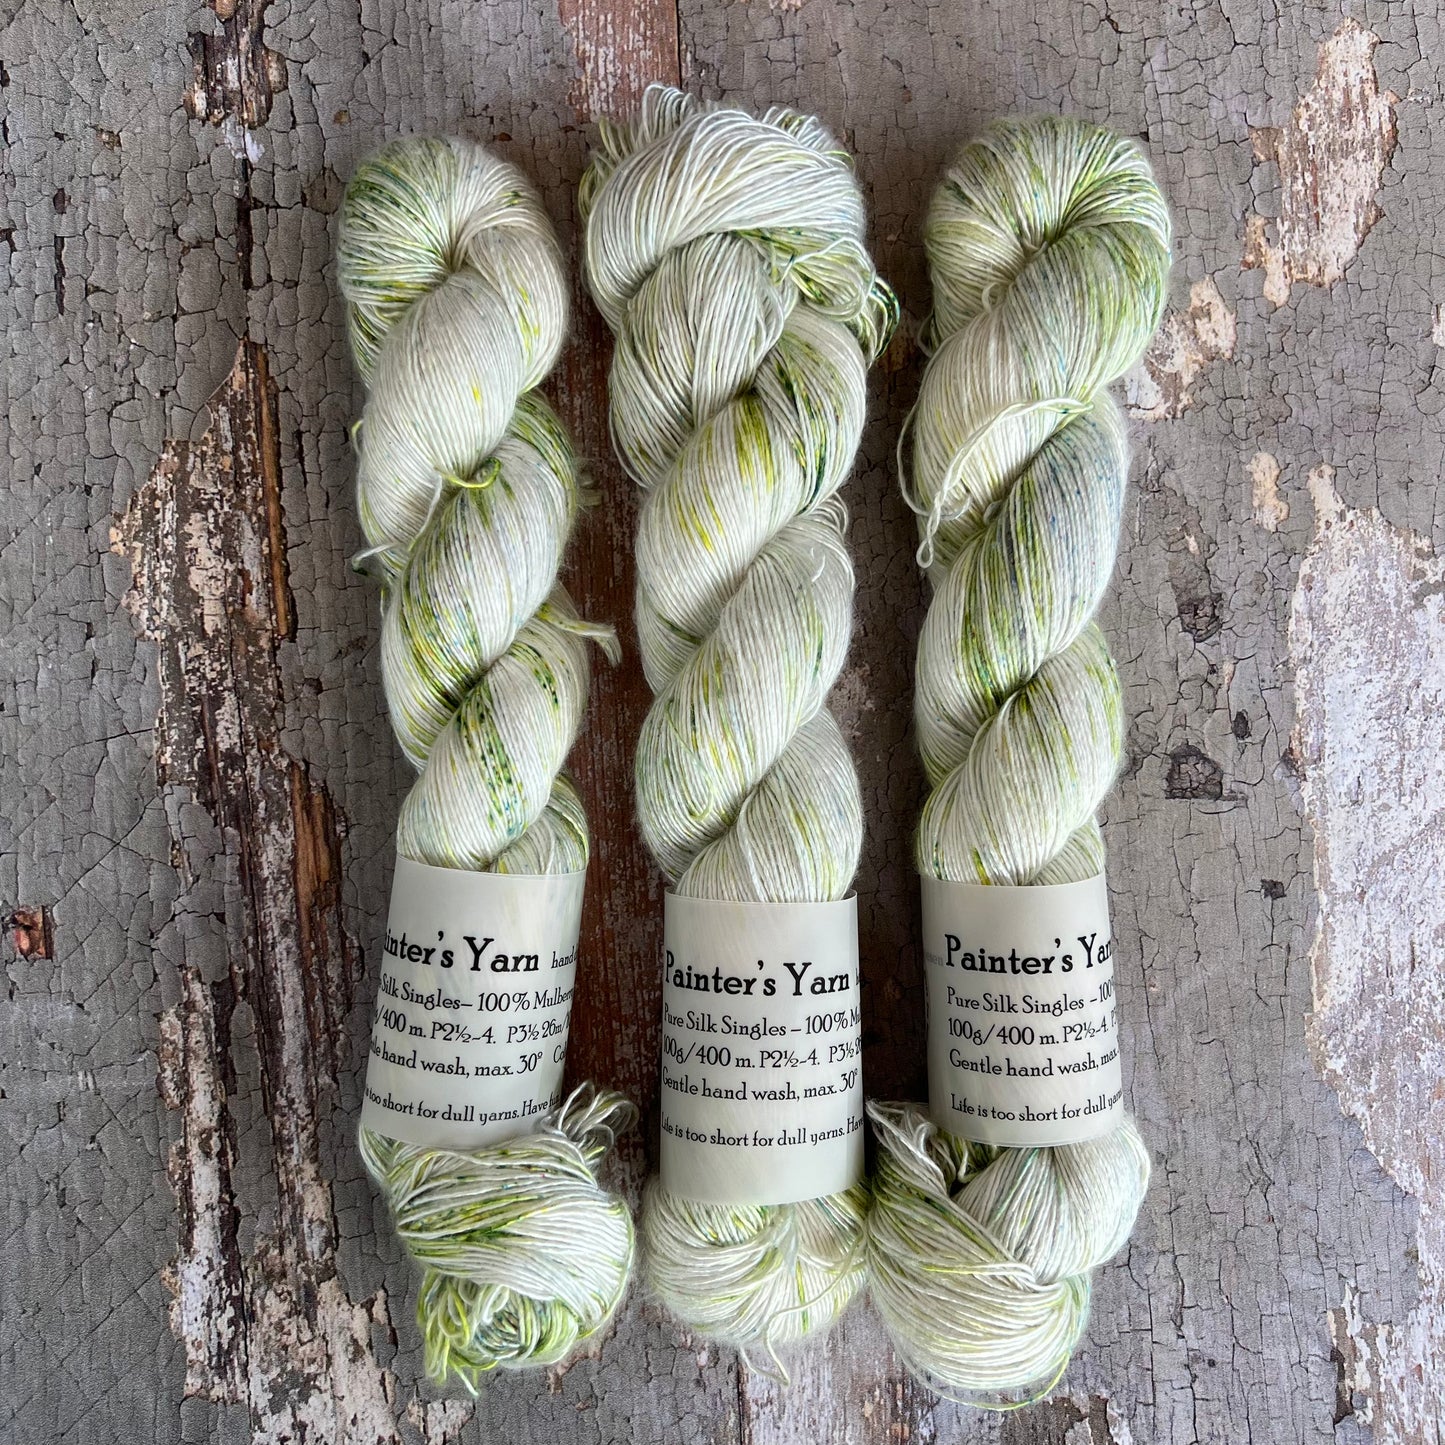 Pure Silk Singles - håndfarvet lækker silkegarn fra Painters Yarn. Luksus til dine pinde.